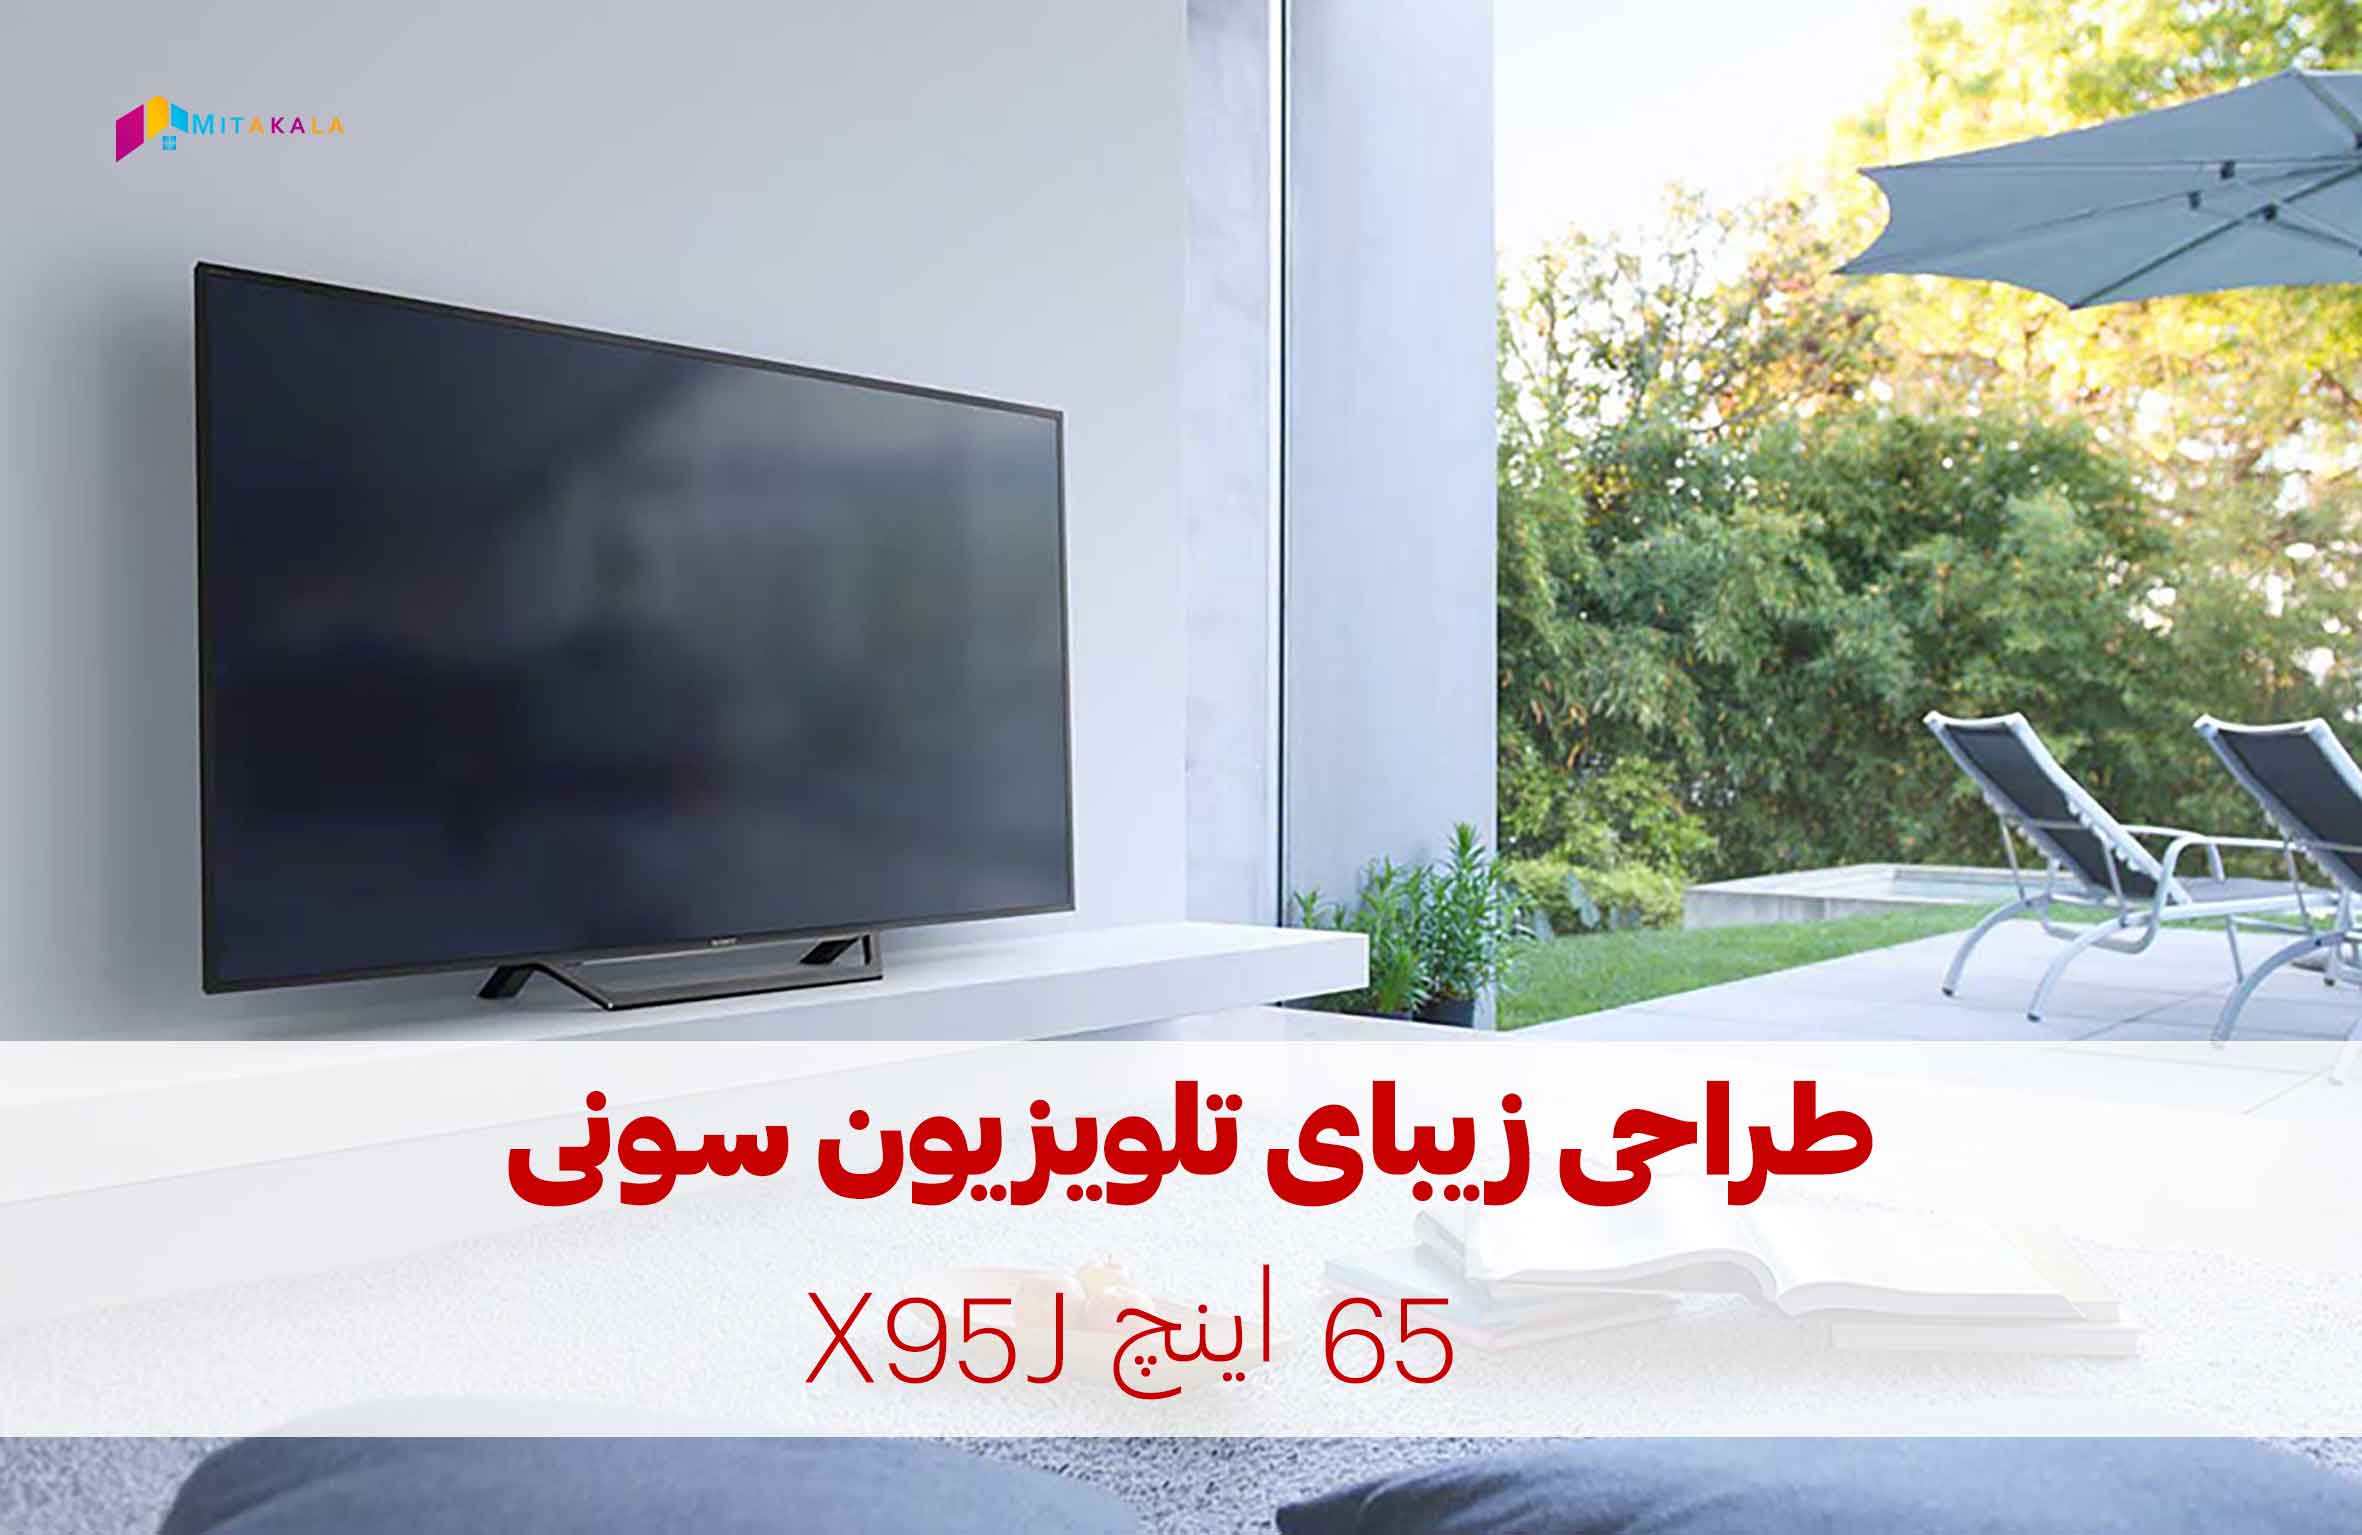 تلویزیون سونی 65x95j